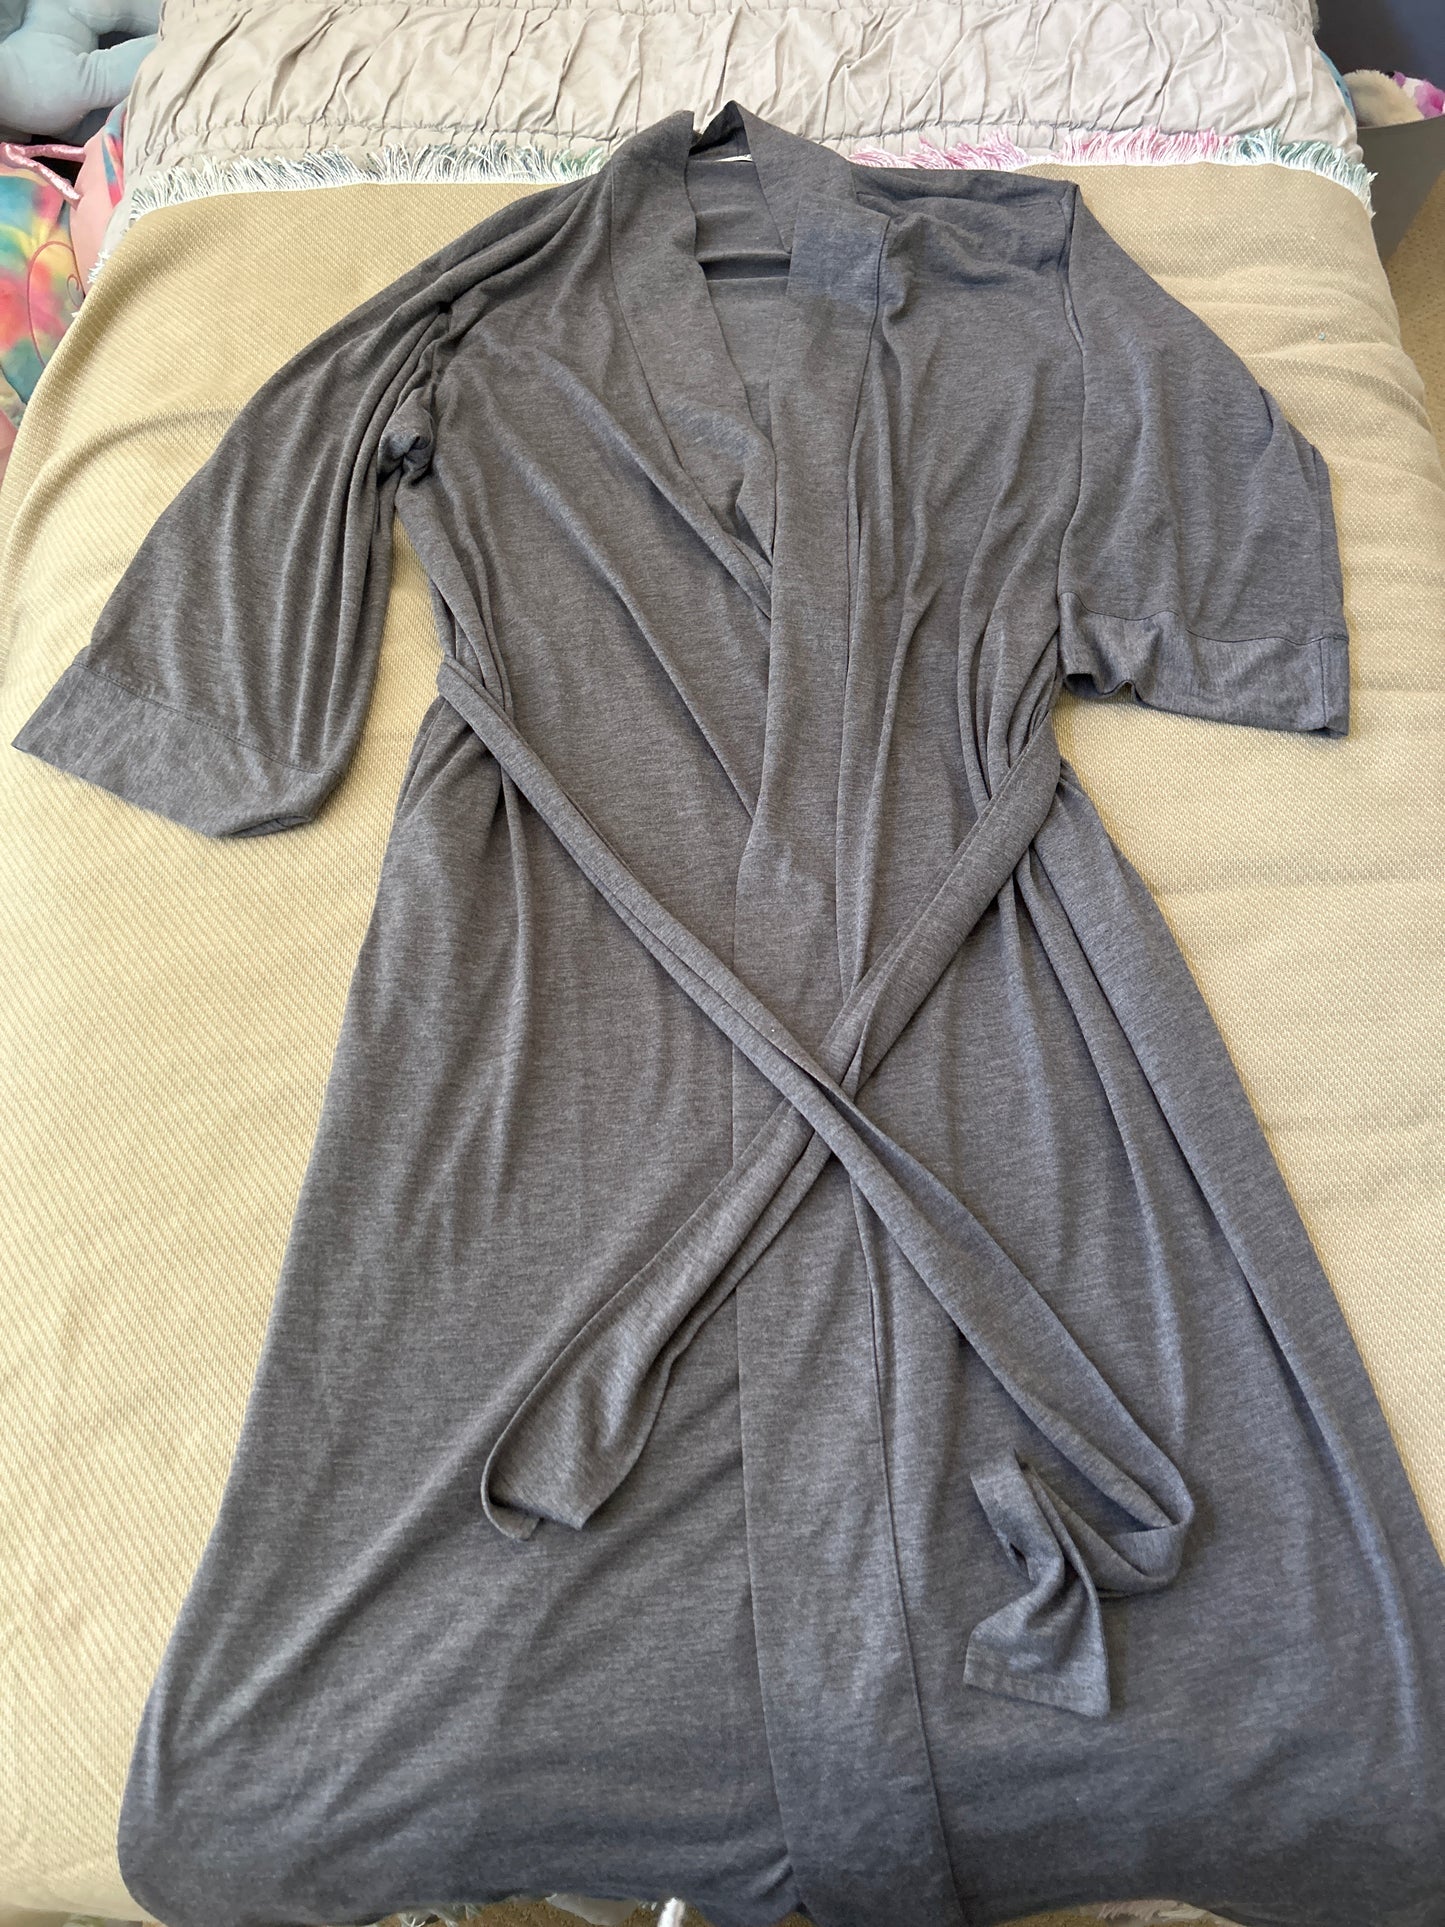 Natori/Women's Robe/Heather Grey/Size M